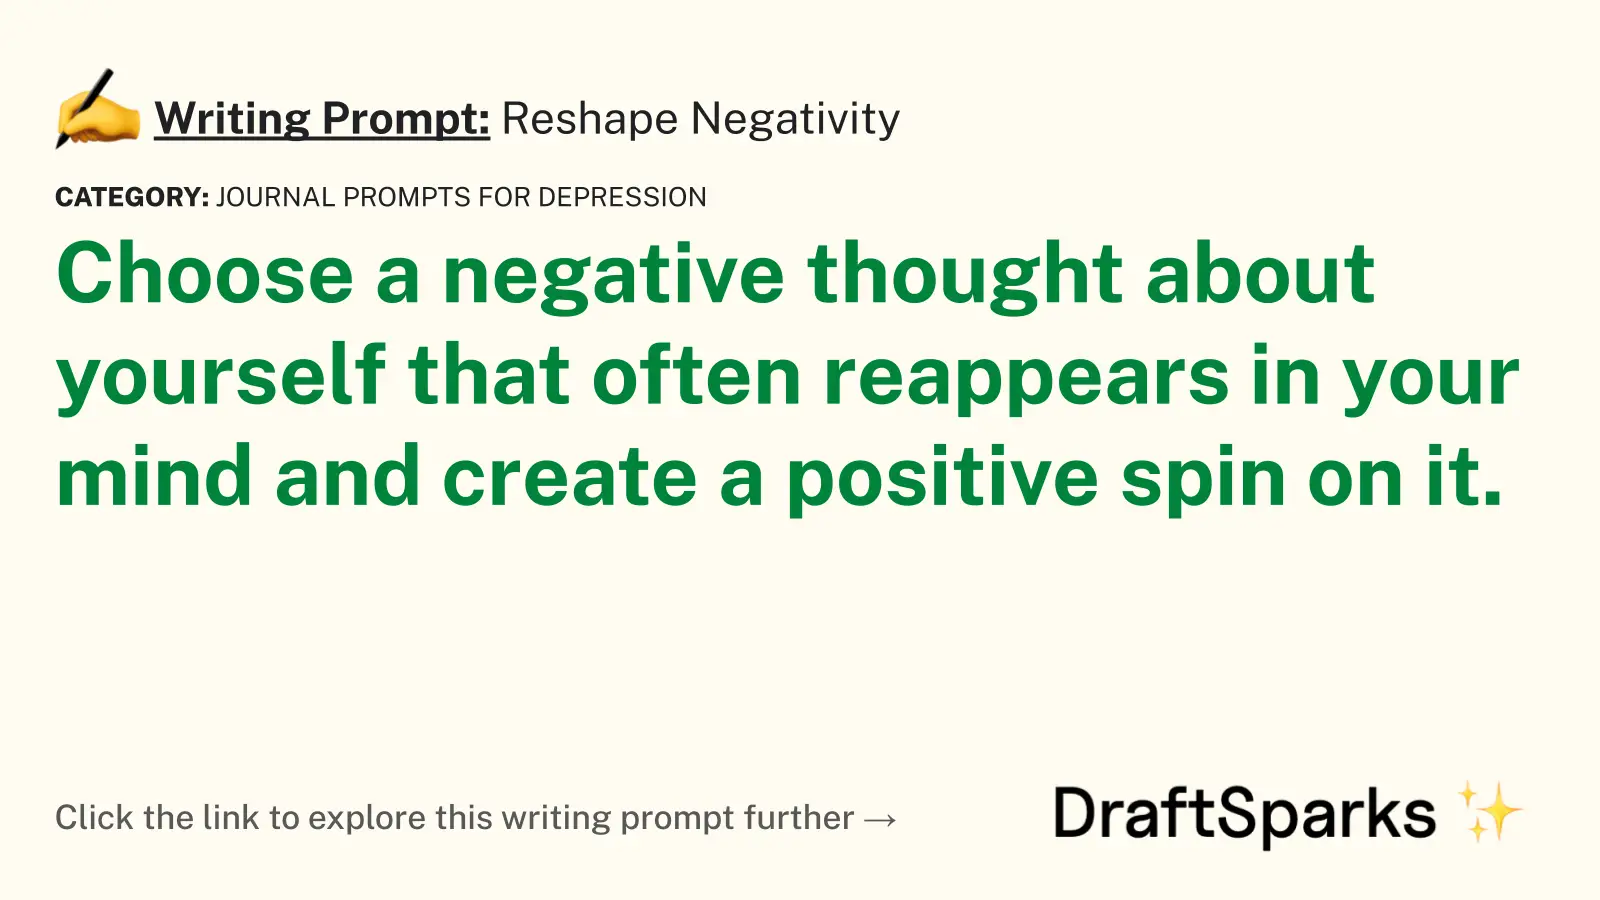 Reshape Negativity